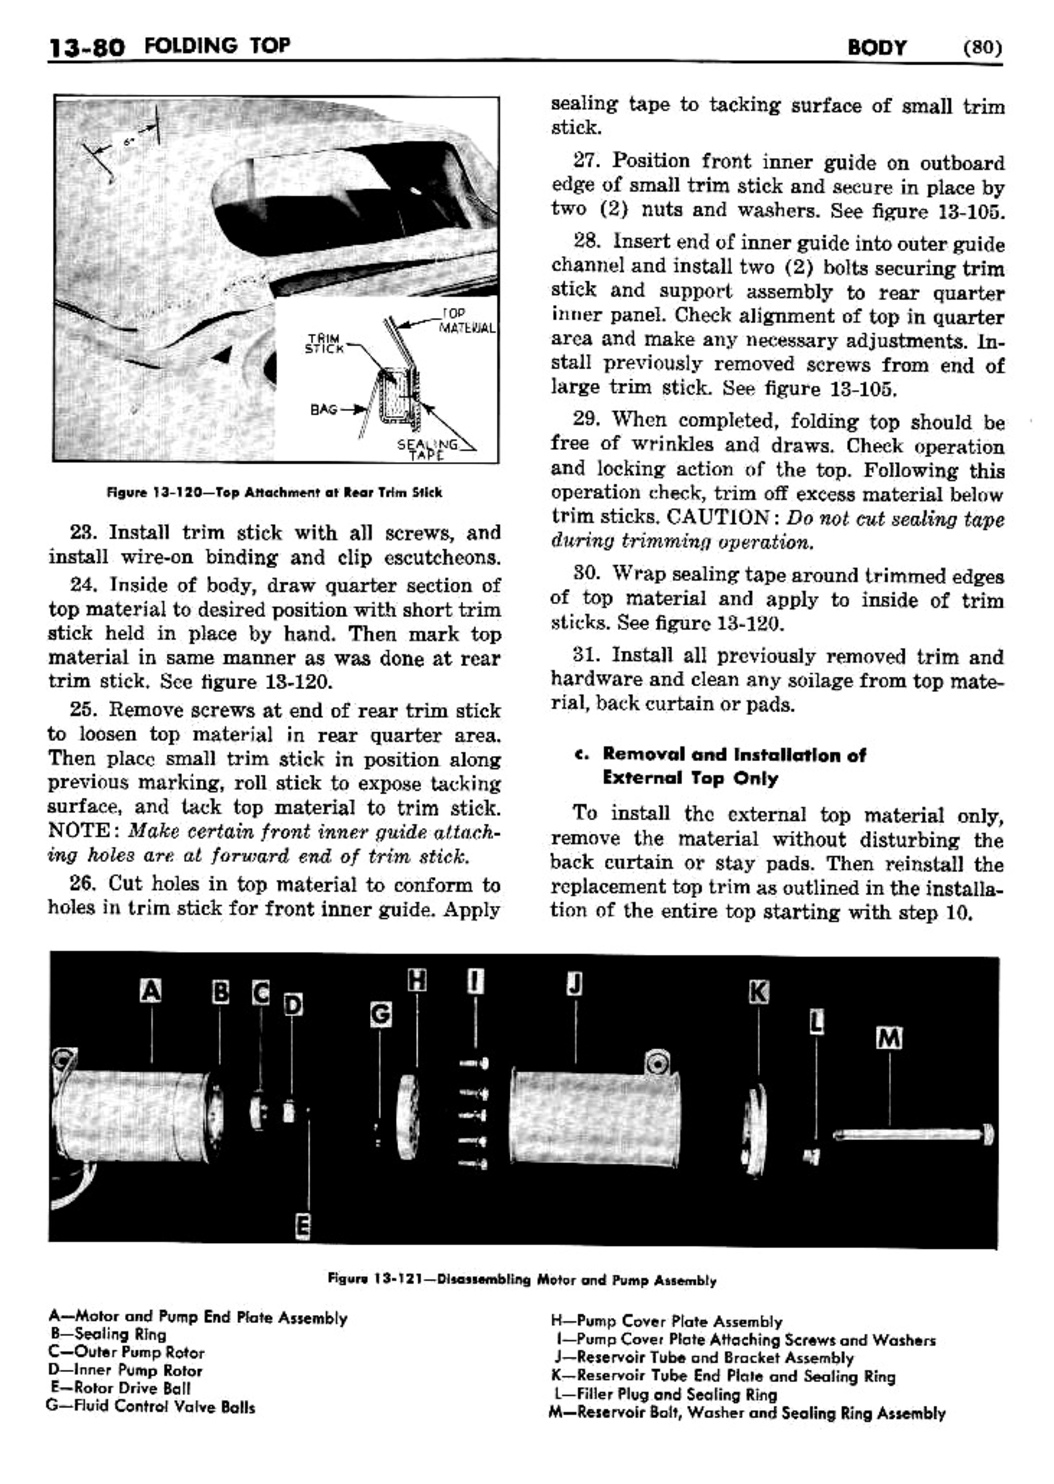 n_1957 Buick Body Service Manual-082-082.jpg